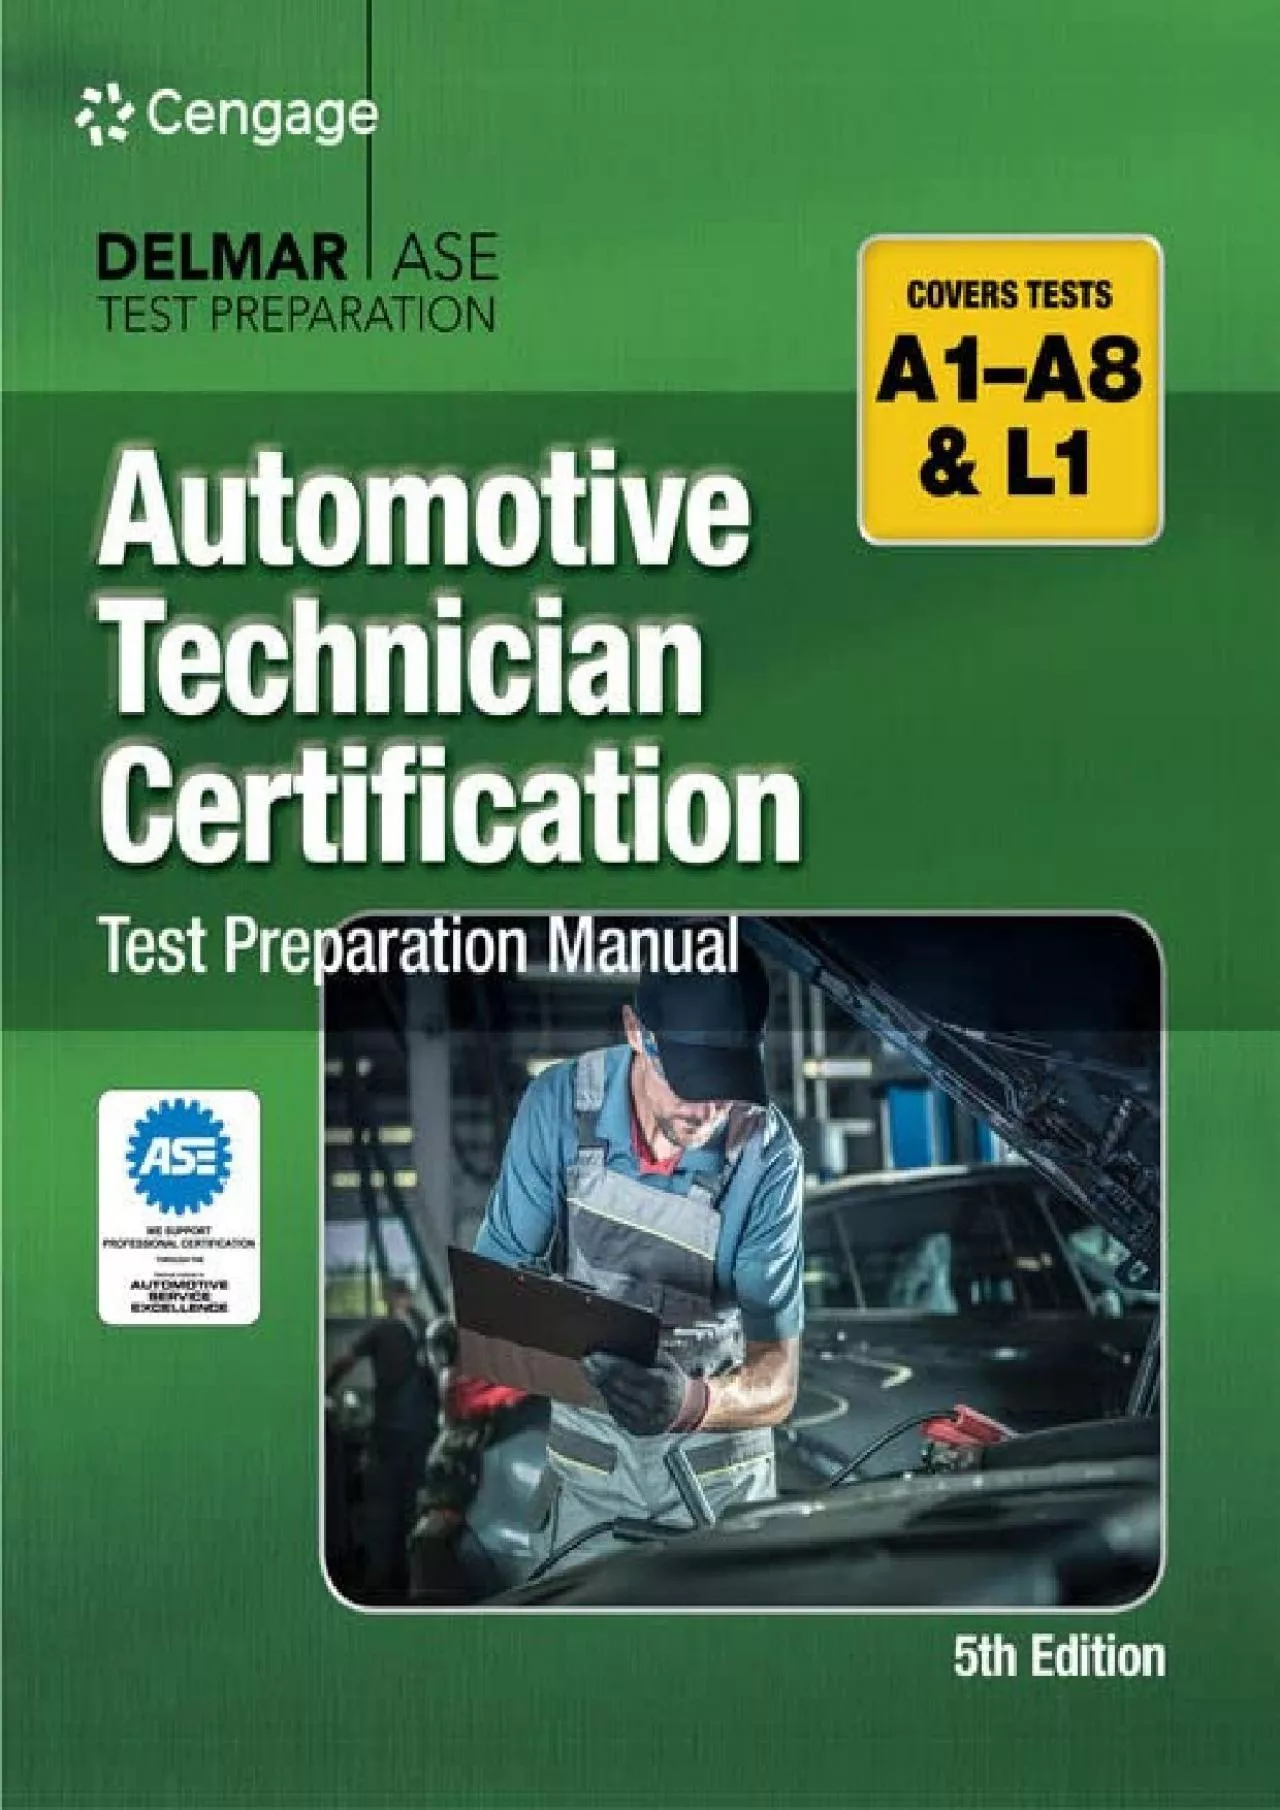 [DOWNLOAD] Automotive Technician Certification Test Preparation Manual A-Series DELMAR